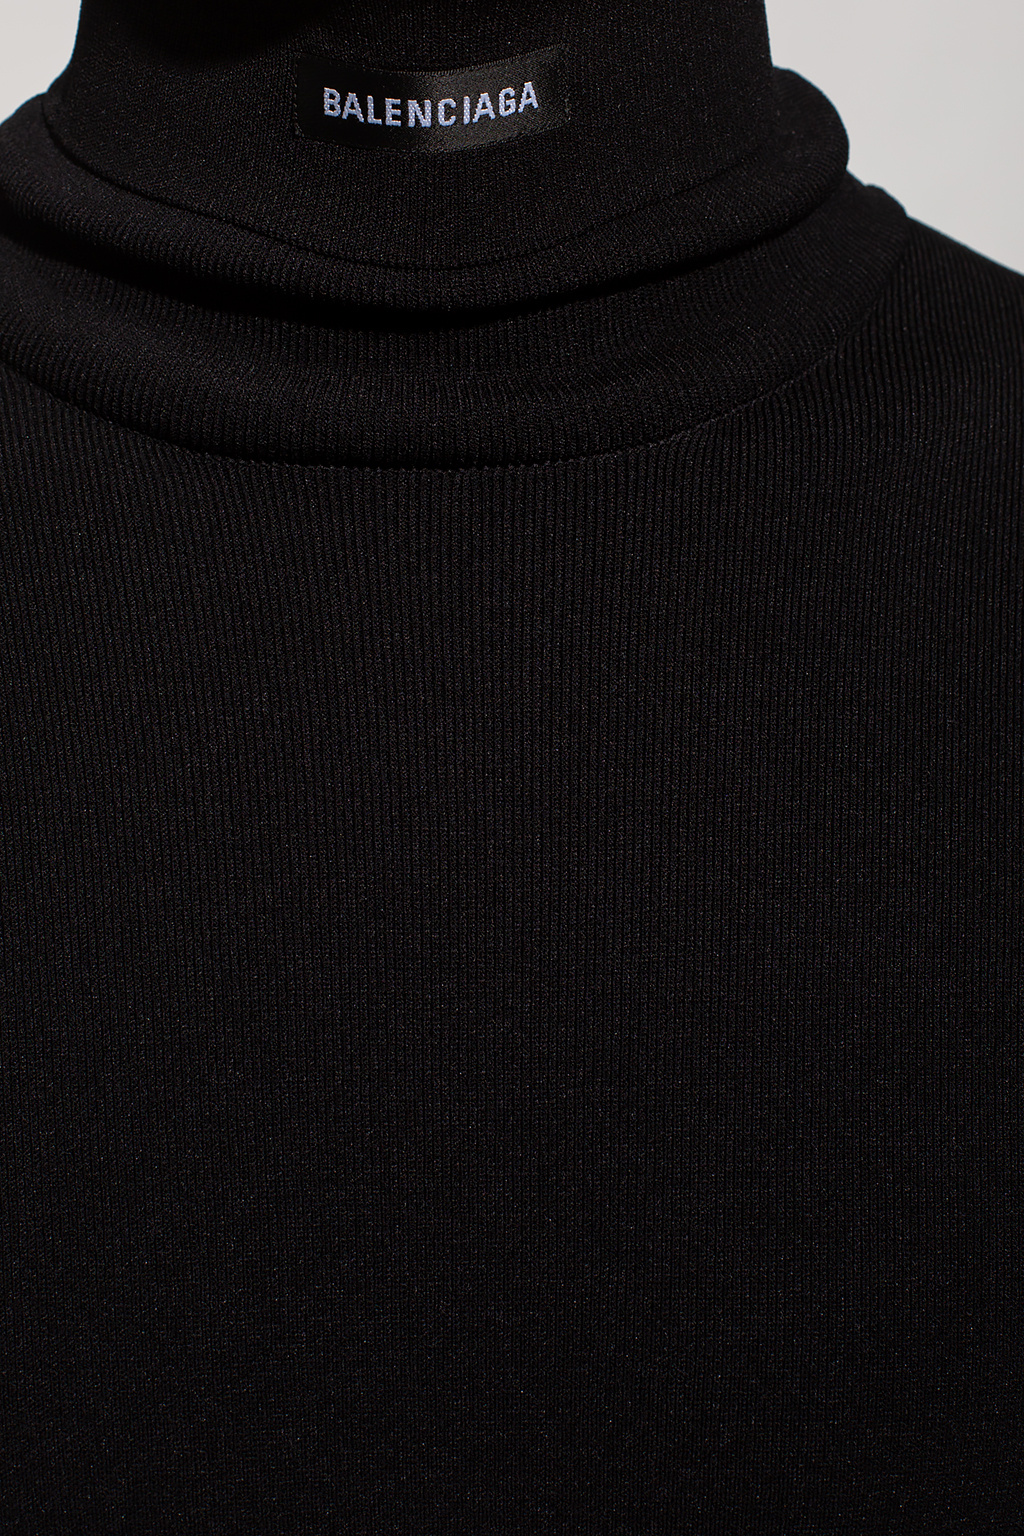 Balenciaga Turtleneck complete sweater with logo